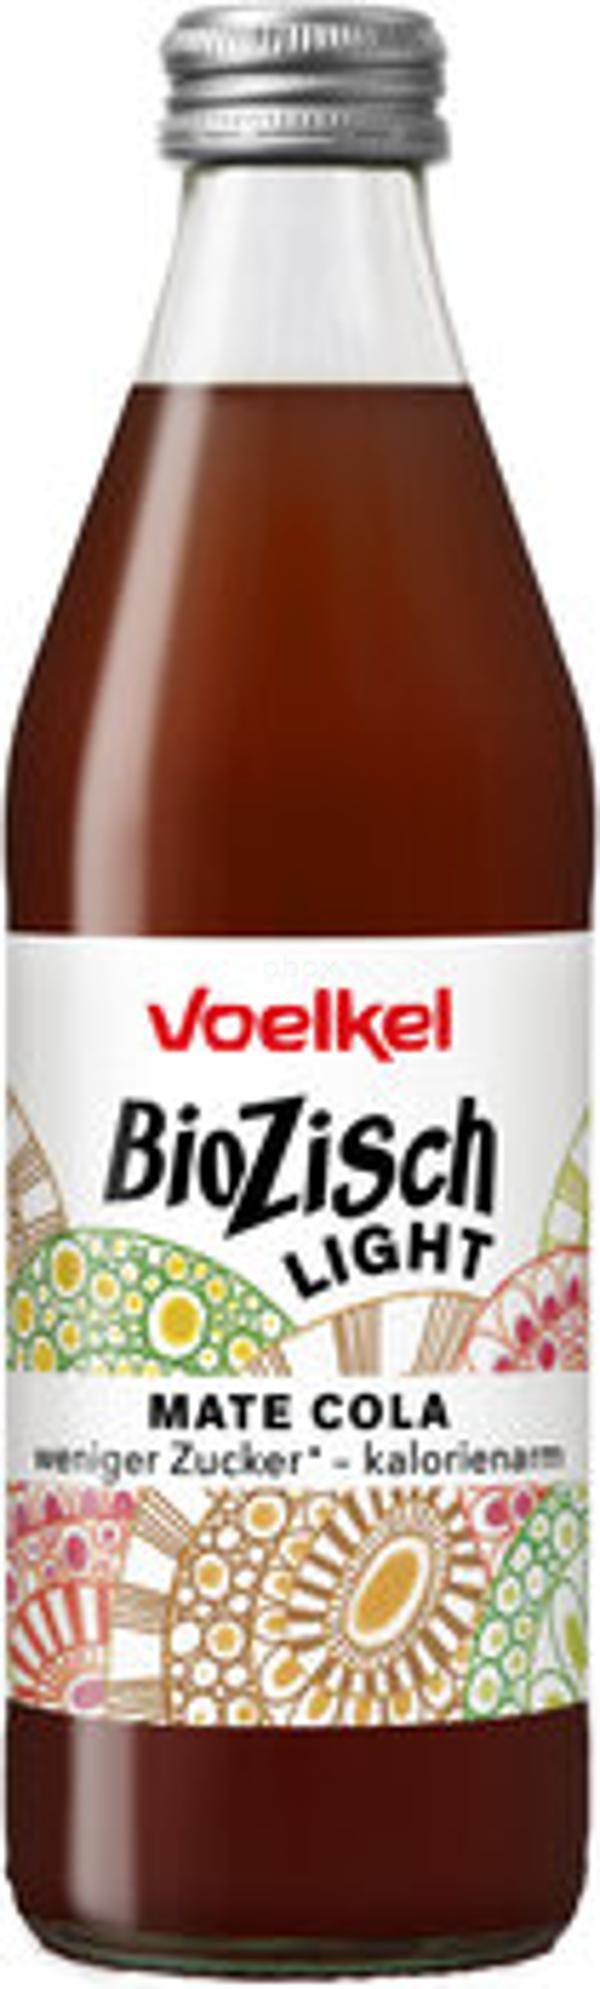 Produktfoto zu BioZisch Light Mate Cola, 0,33 l